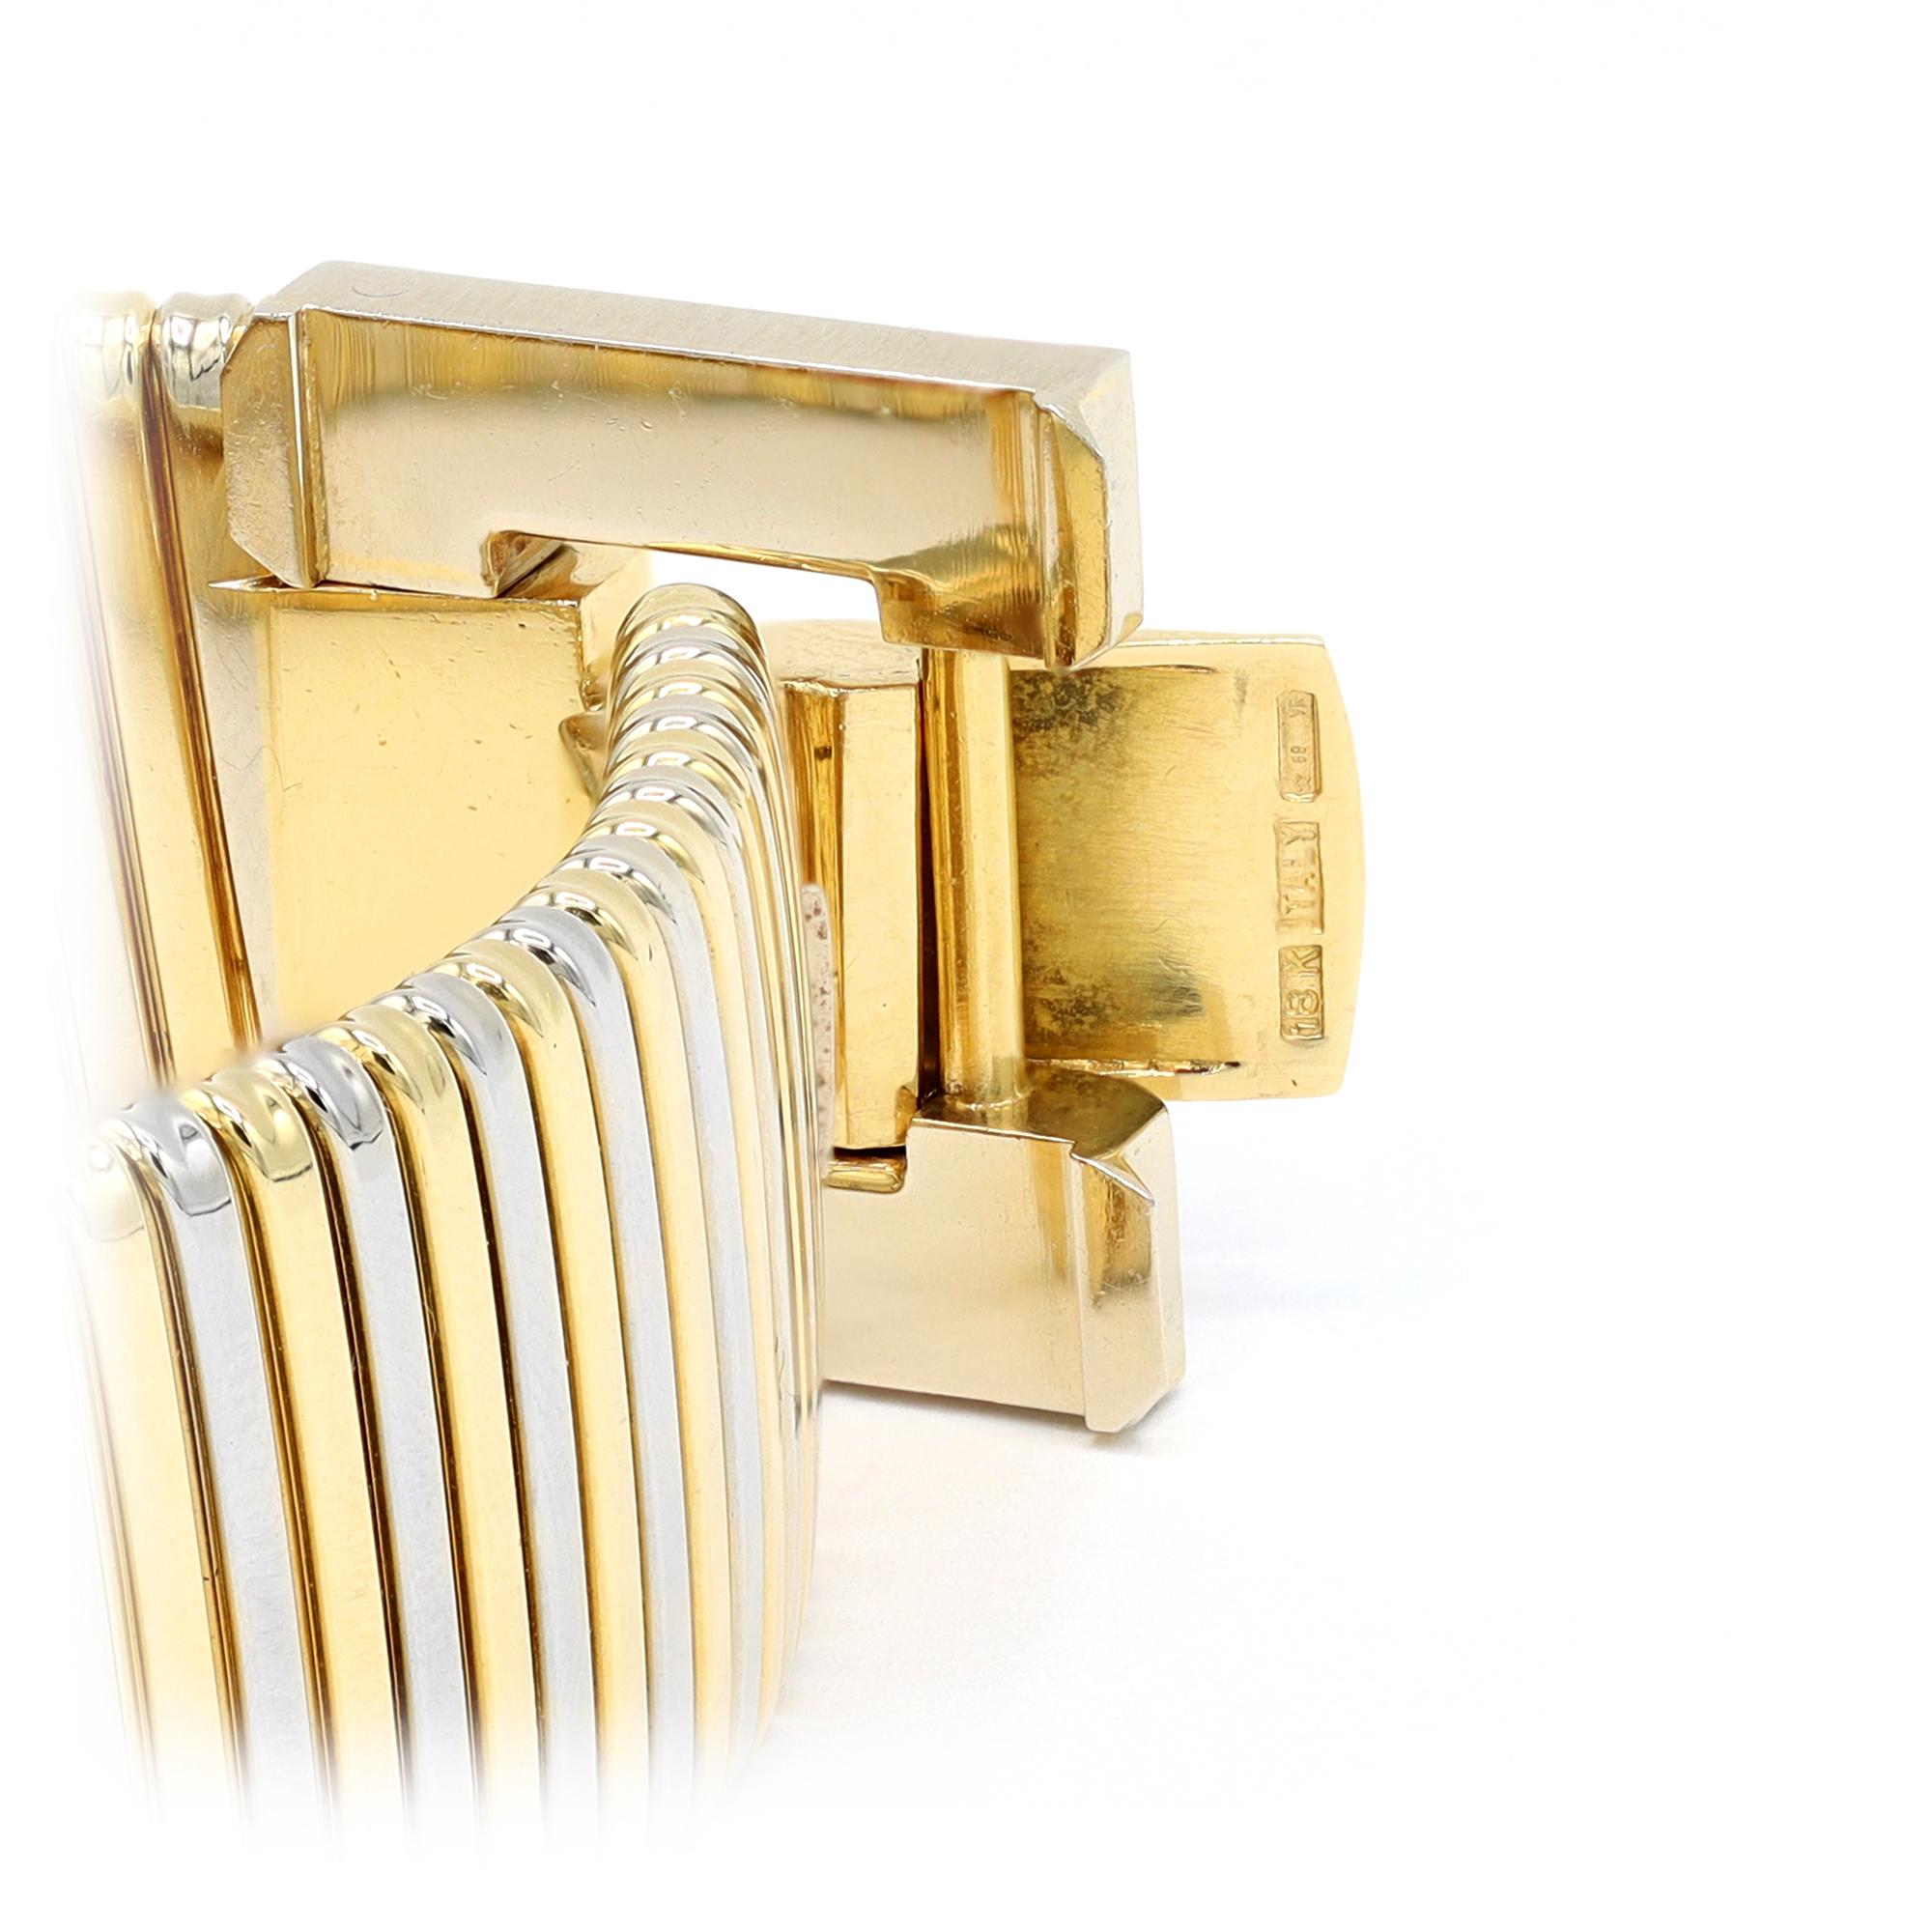 Contemporary Ca 1980 Italian Tubogas Buckle Bracelet in Two-Tone 18 Karat Gold